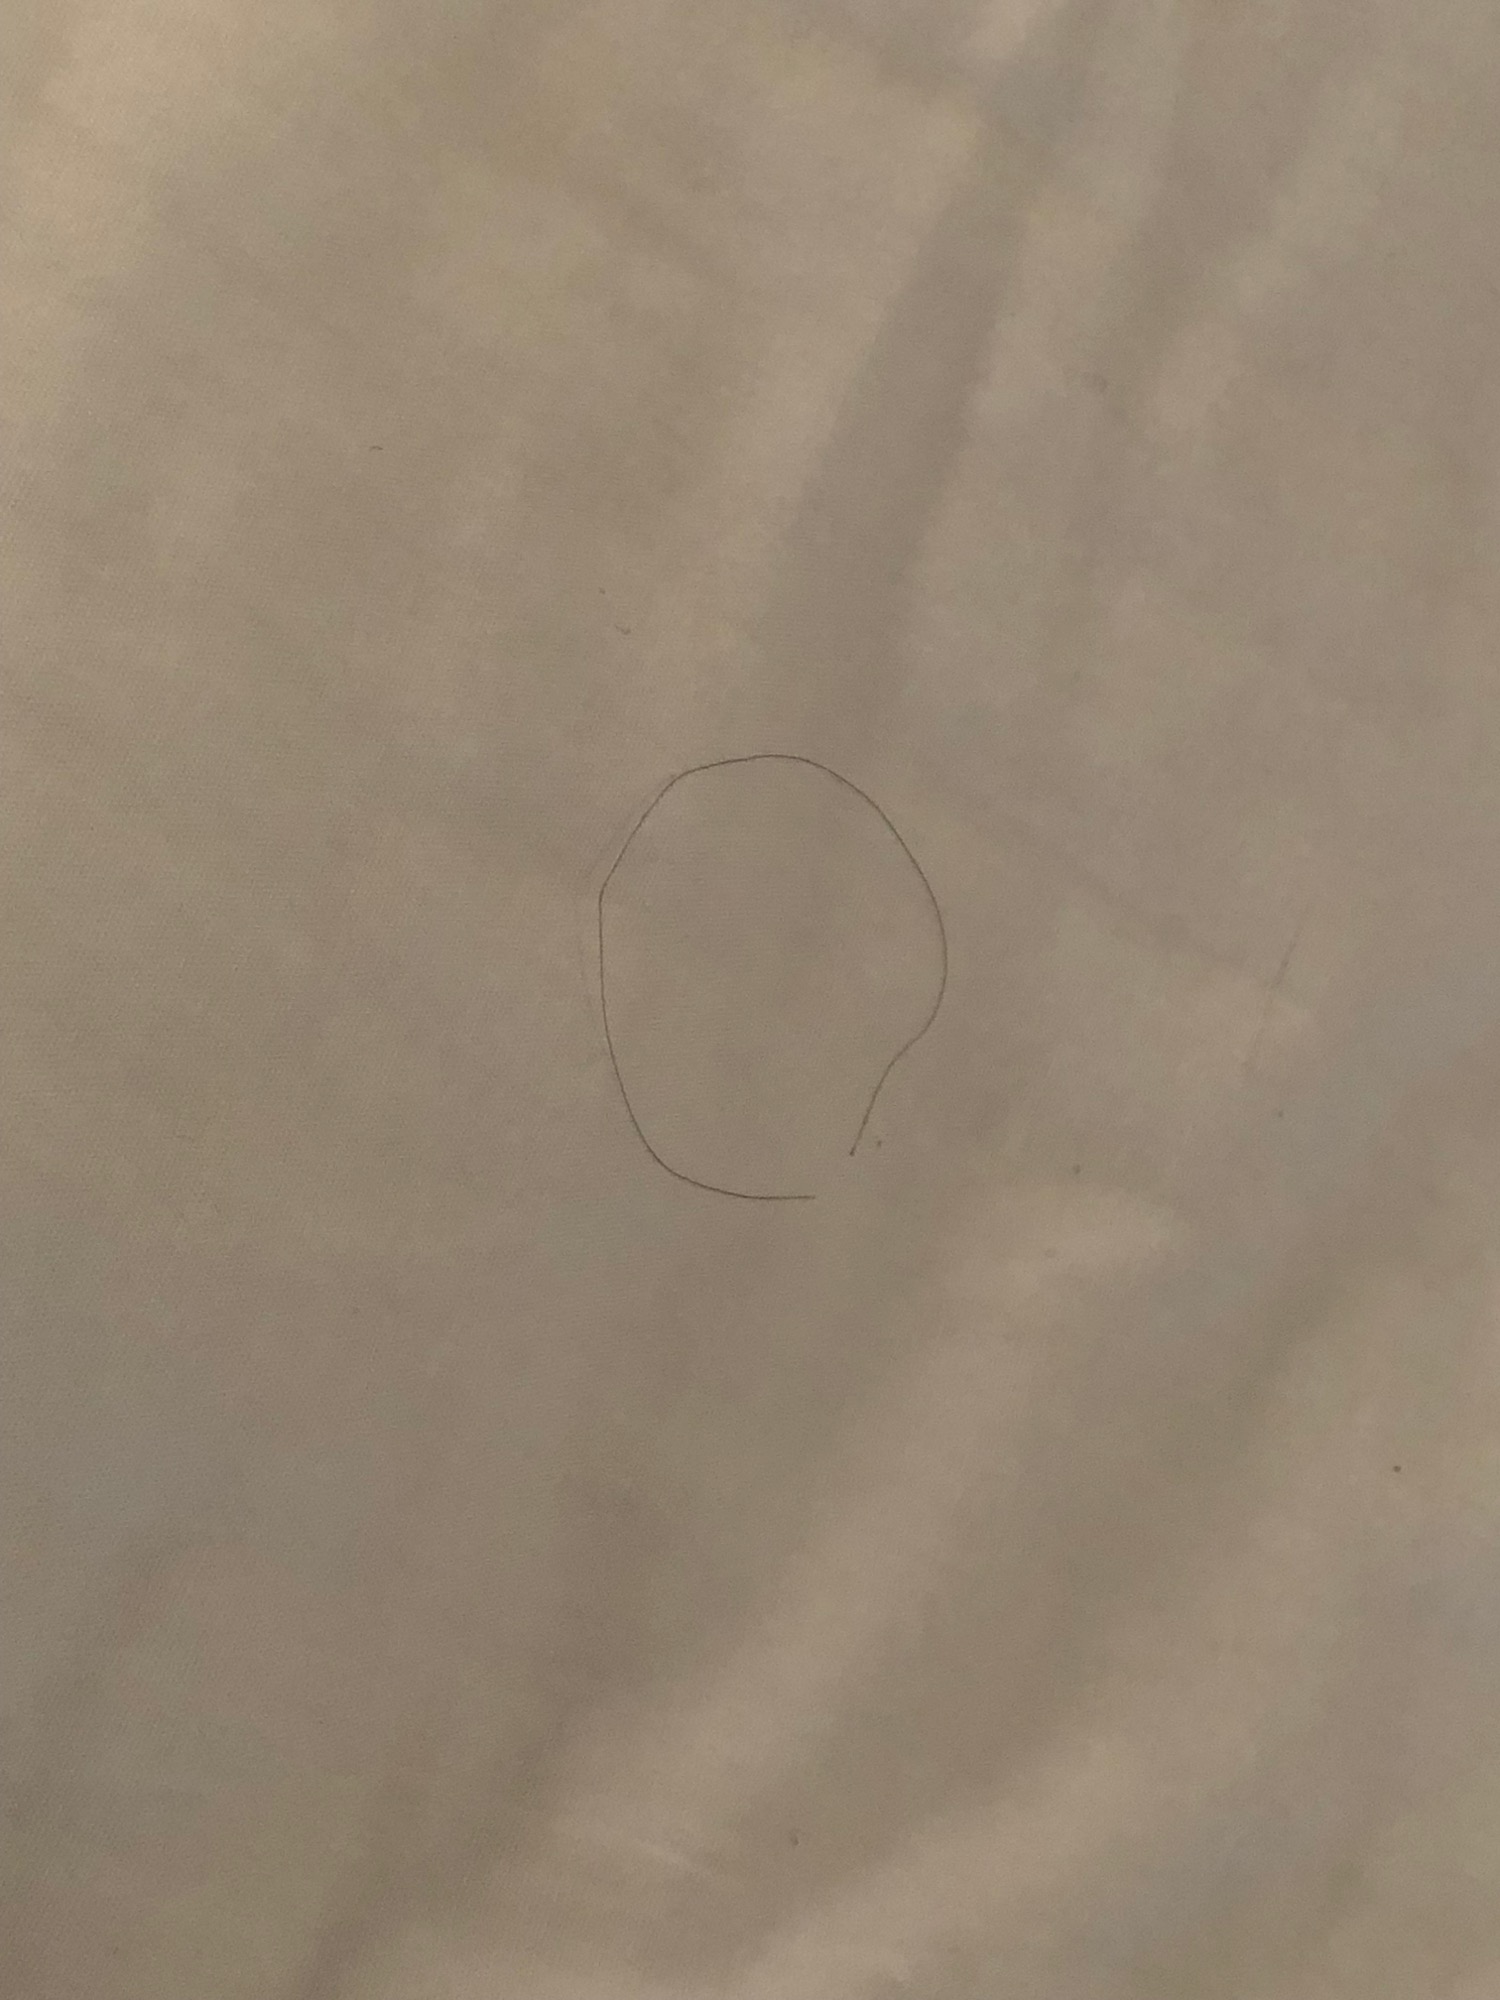 a circle drawn on a white surface